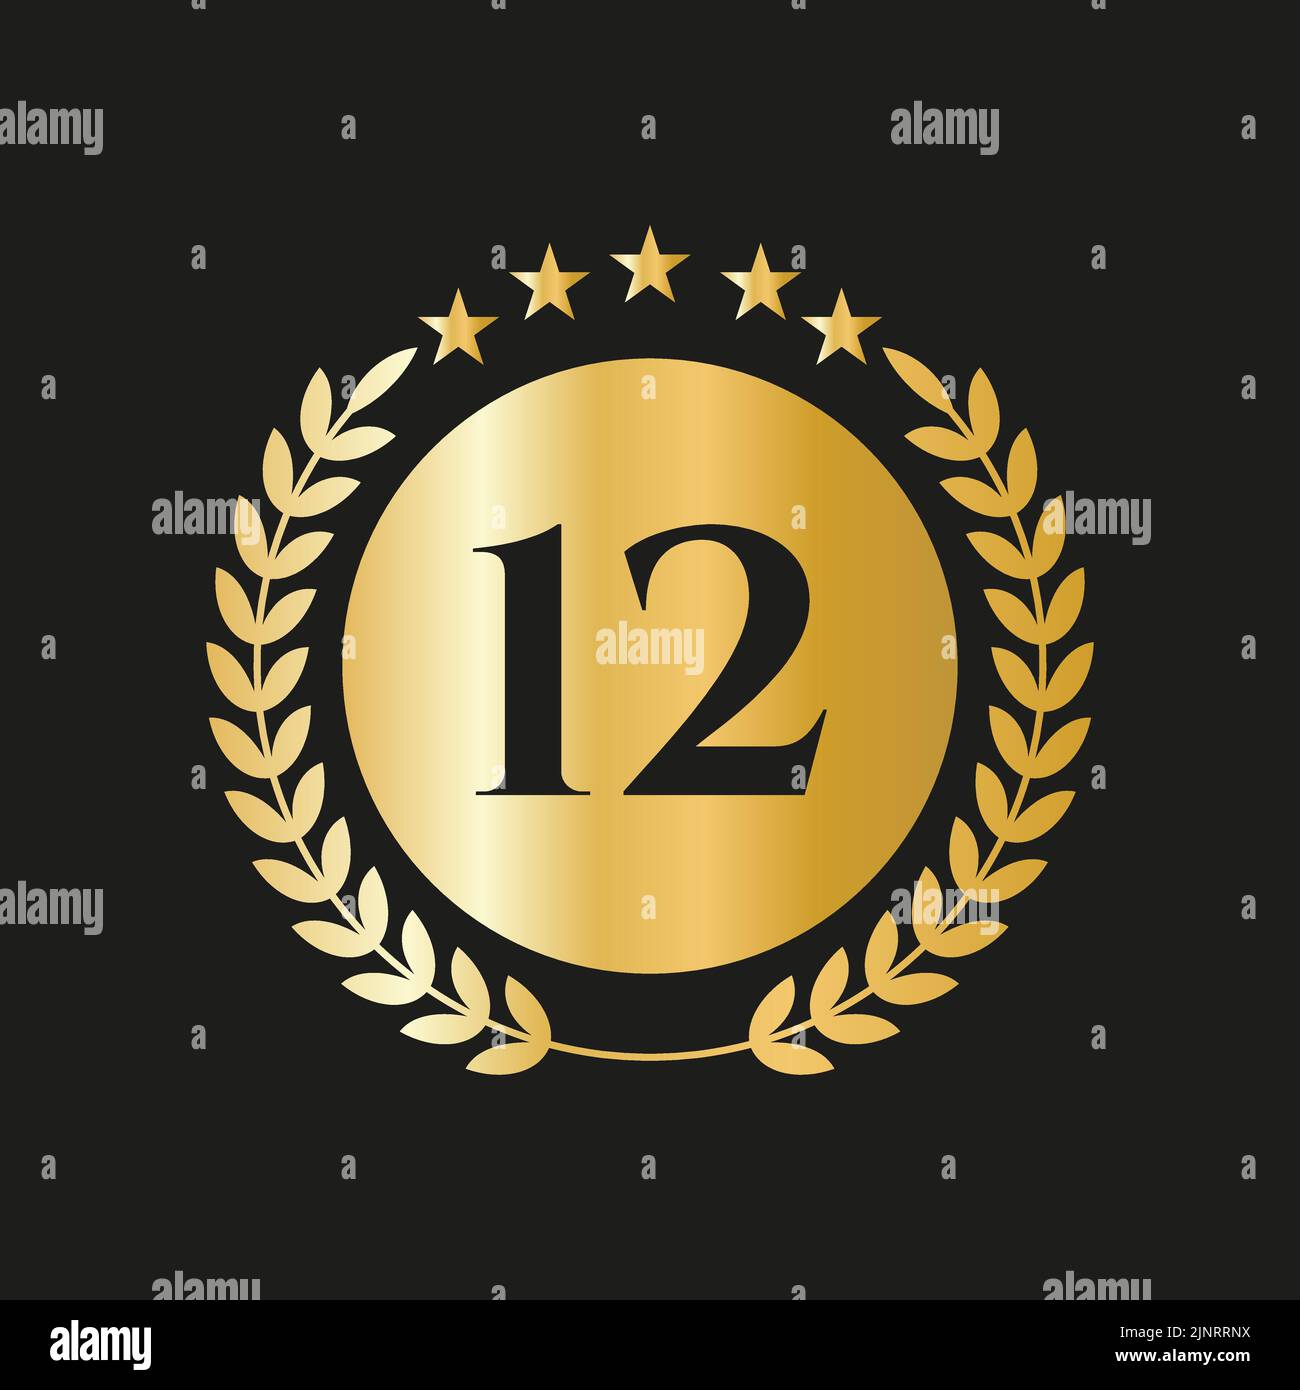 12th anniversary celebration logo Royalty Free Vector Image